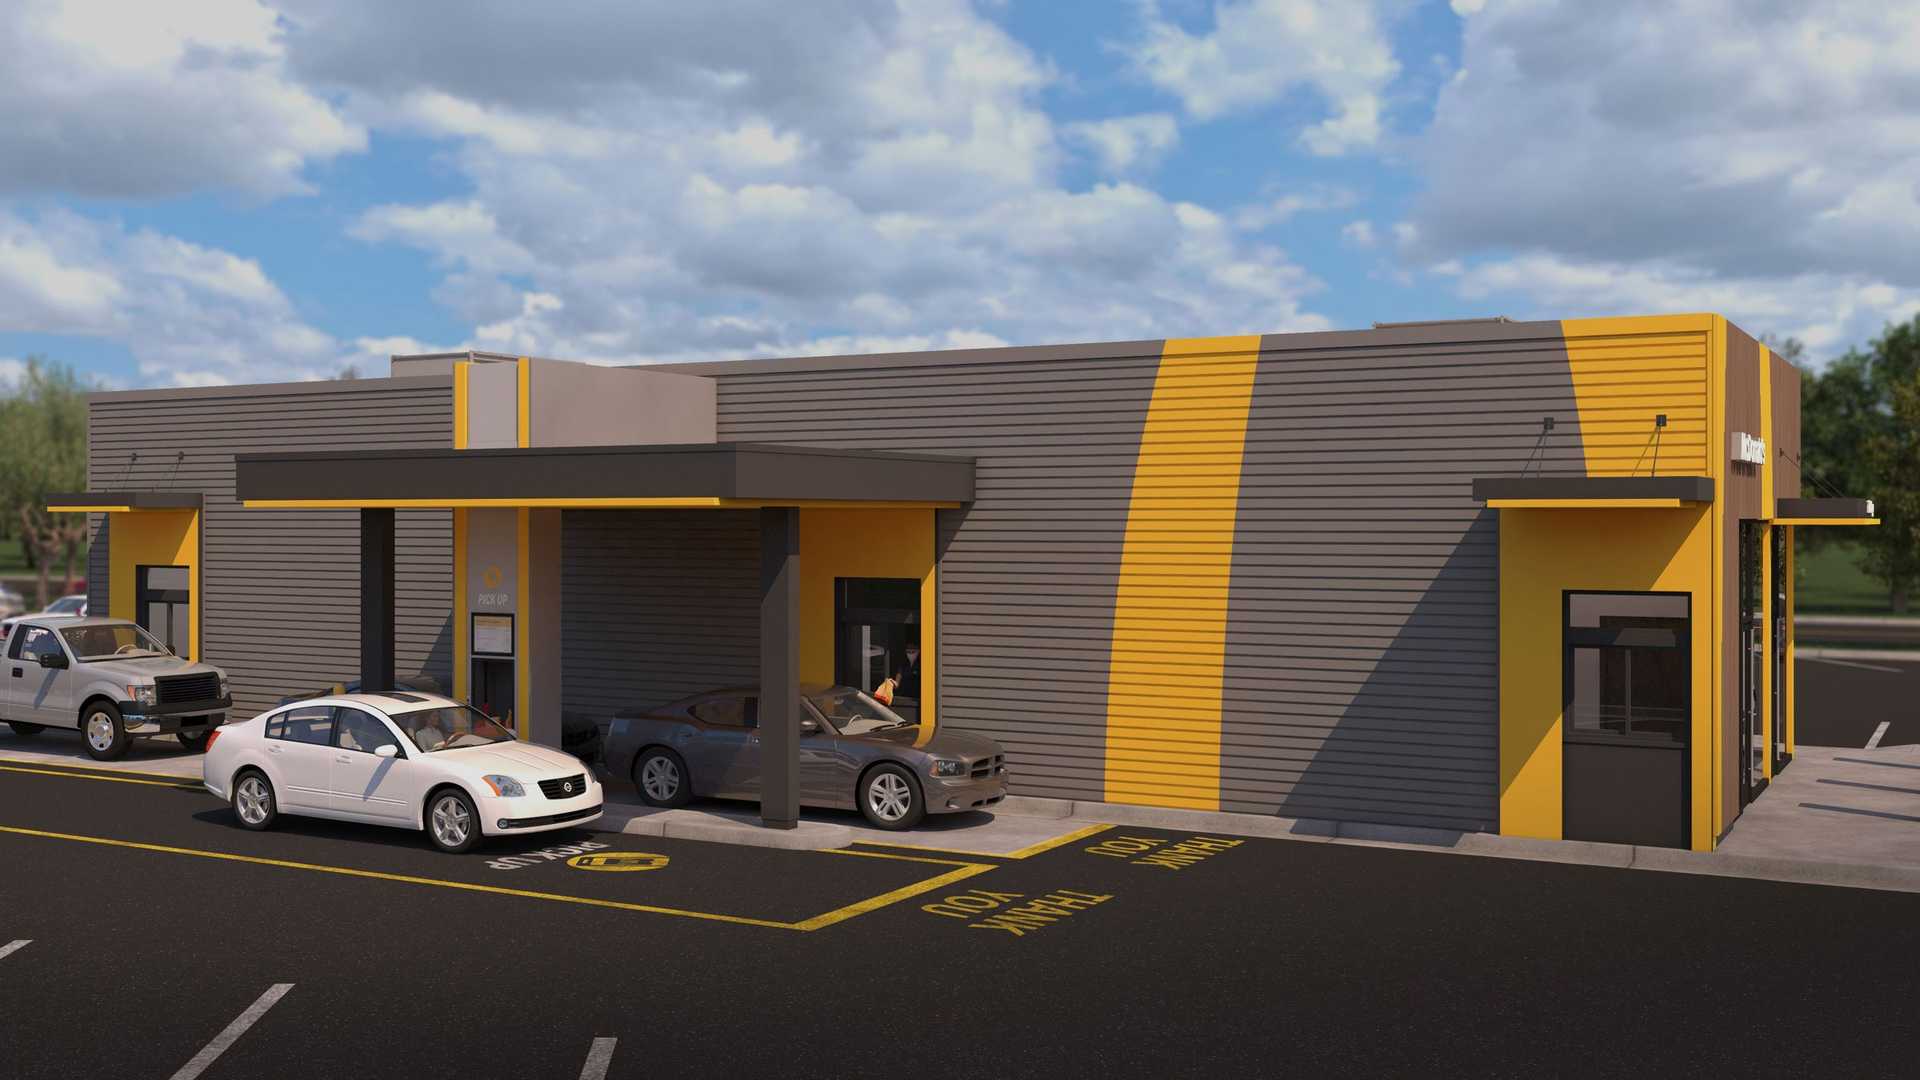 Architect's rendering of a next-generation McDonald's drive-thru restaurant.